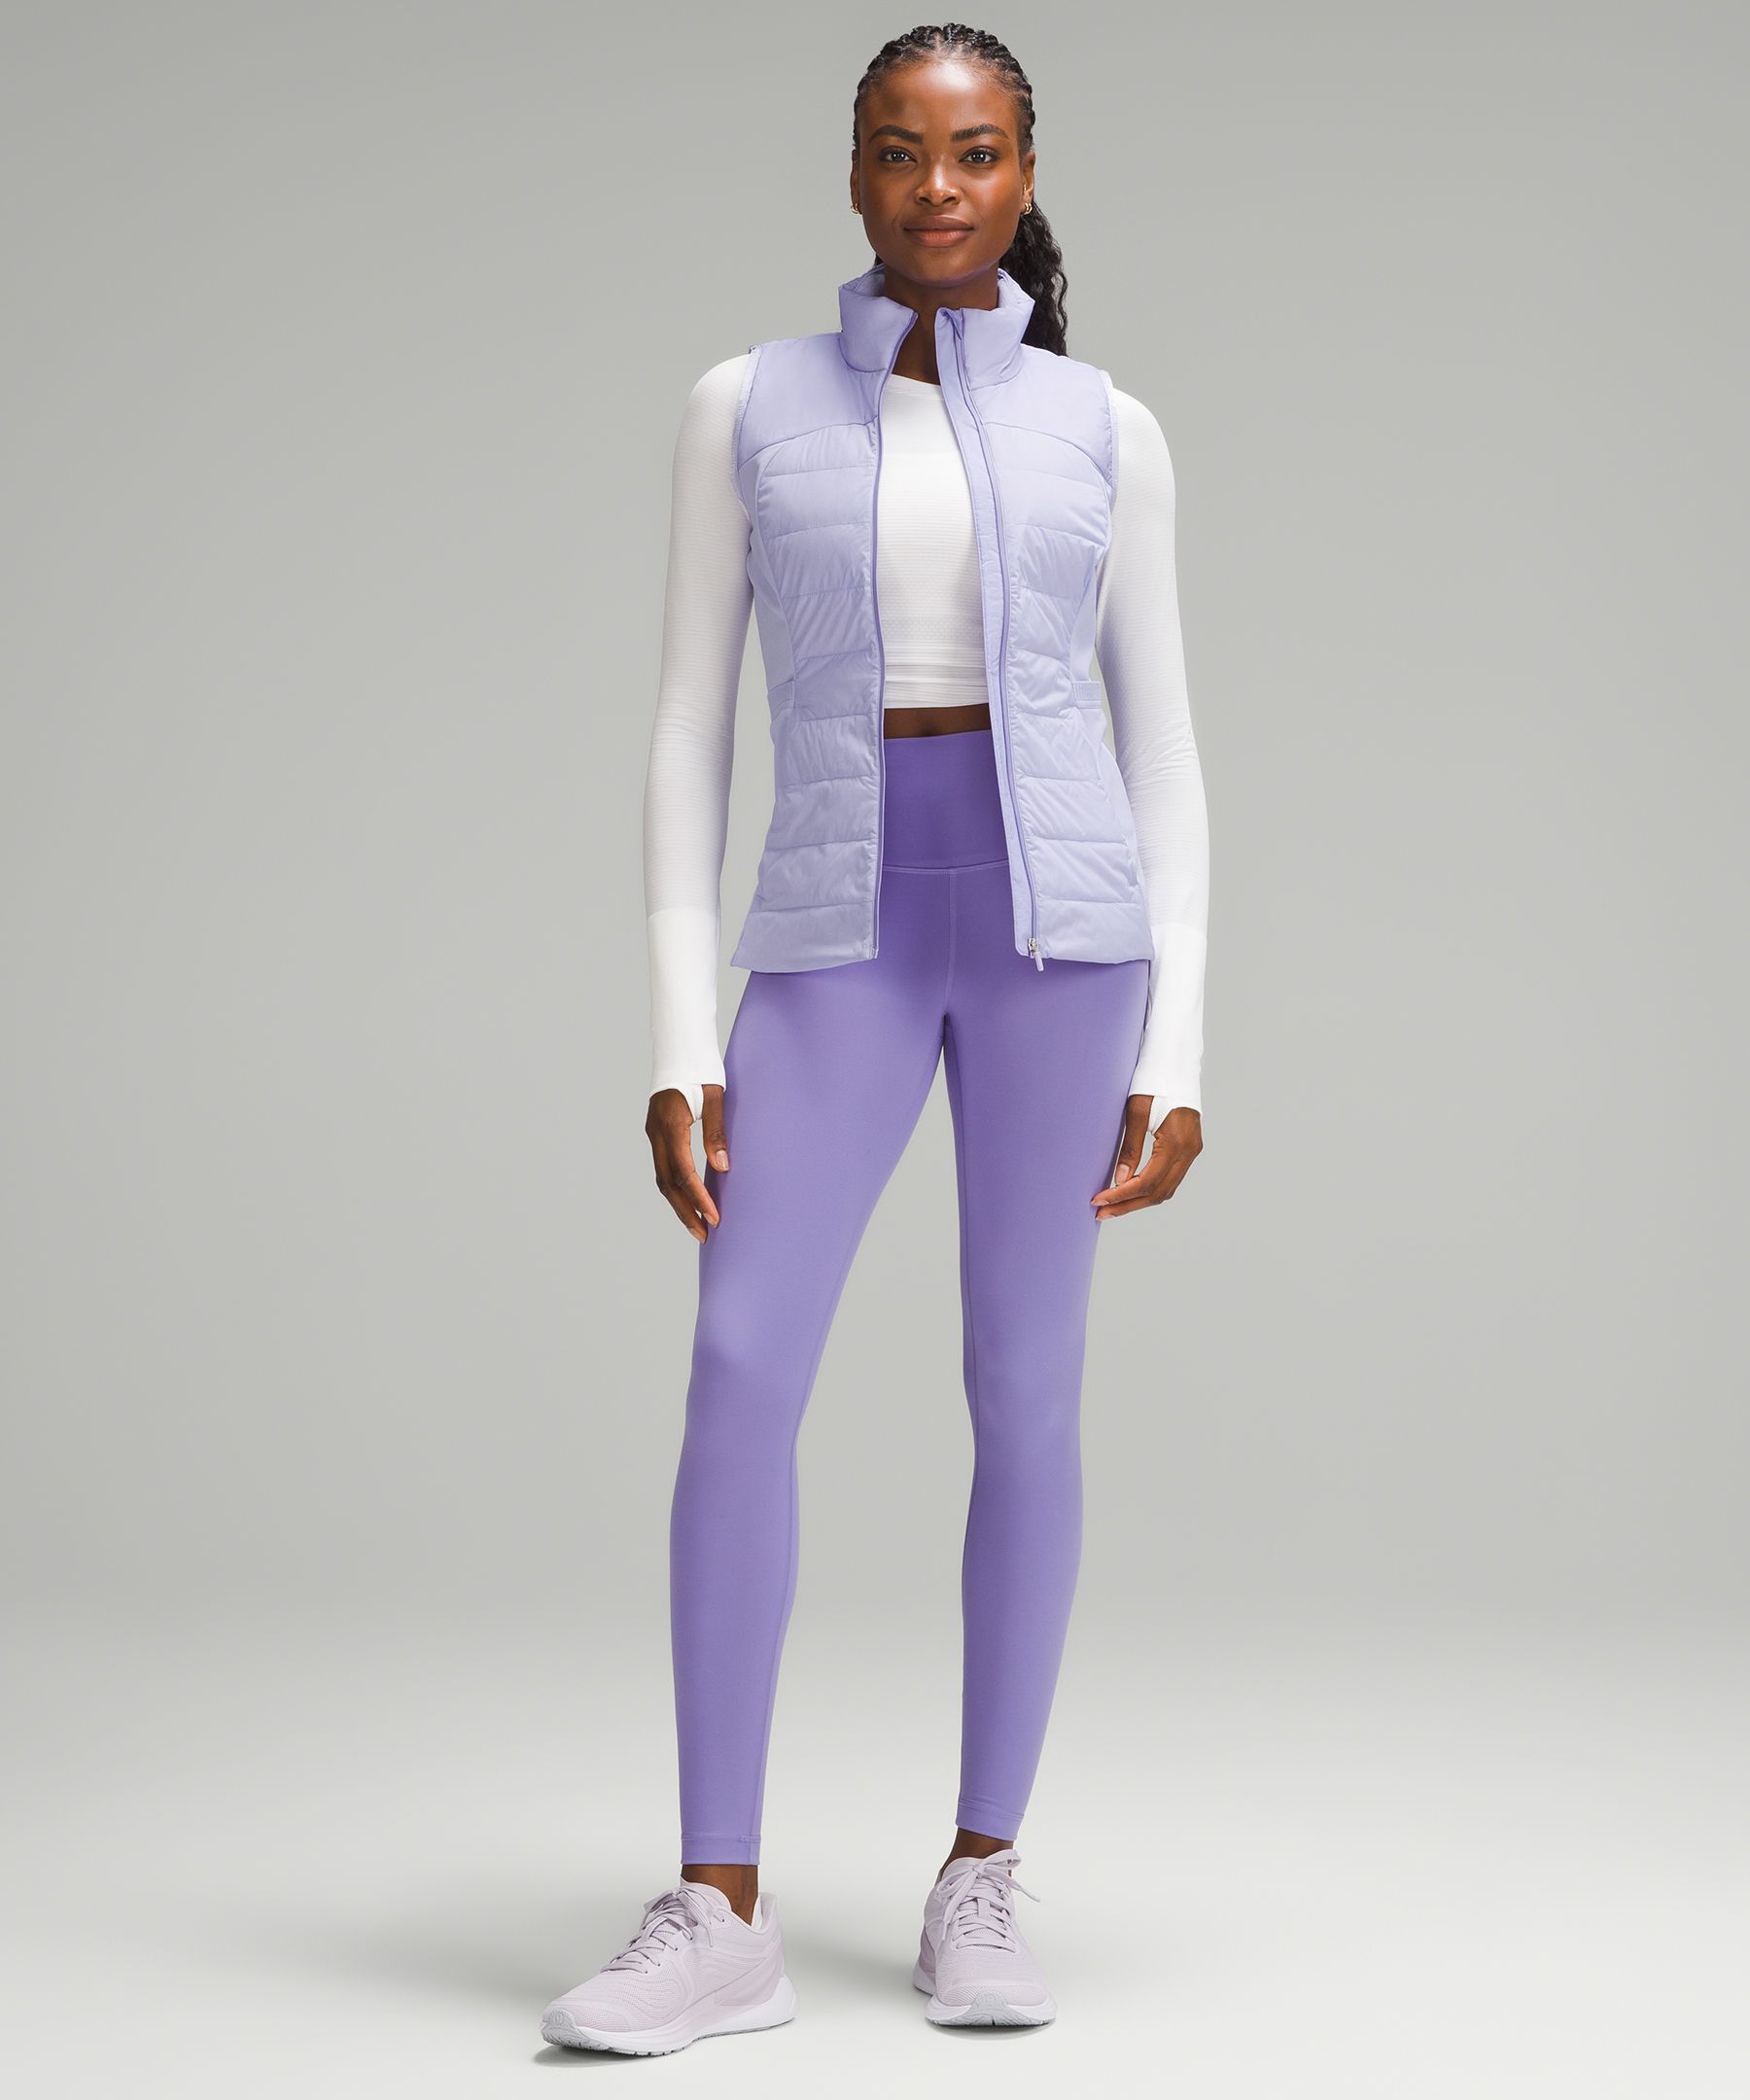 lululemon - Lululemon Reversible Vest, Size 14/16 on Designer Wardrobe